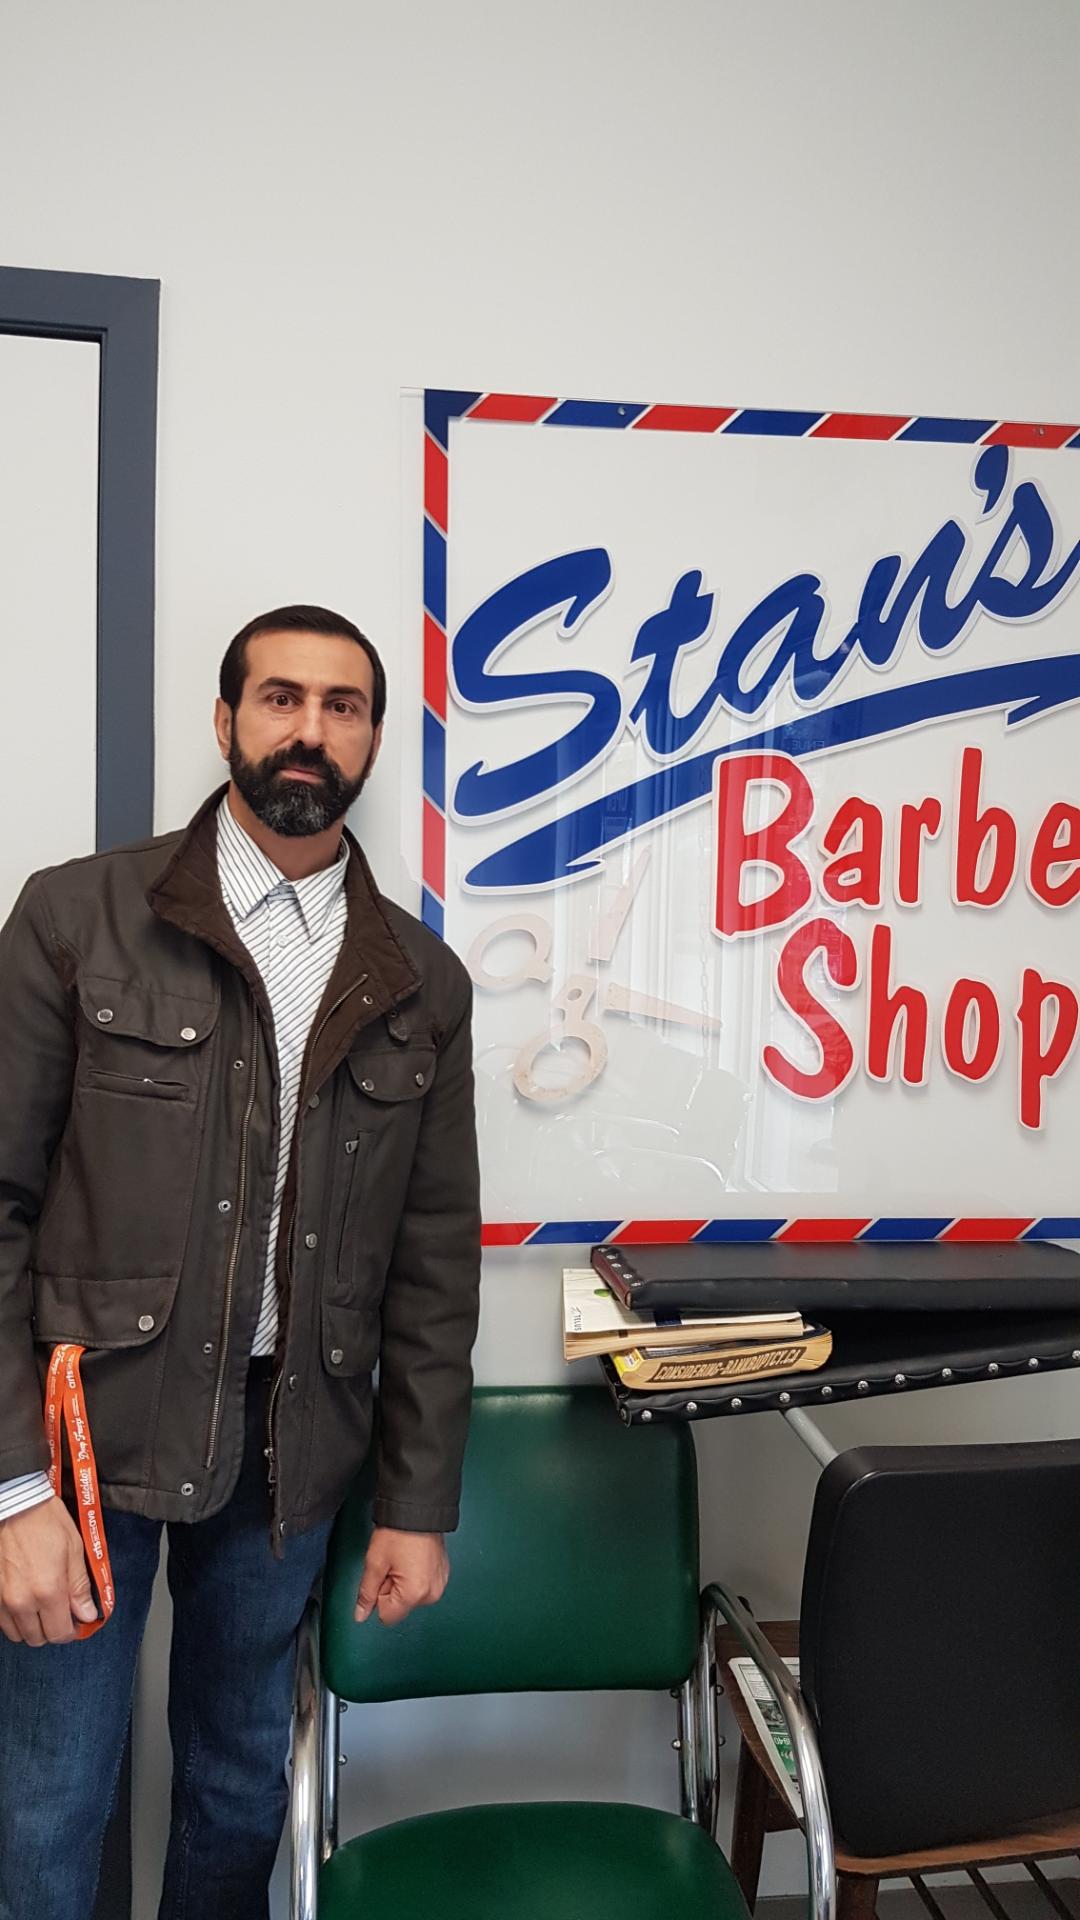 Stan's Barber Shop